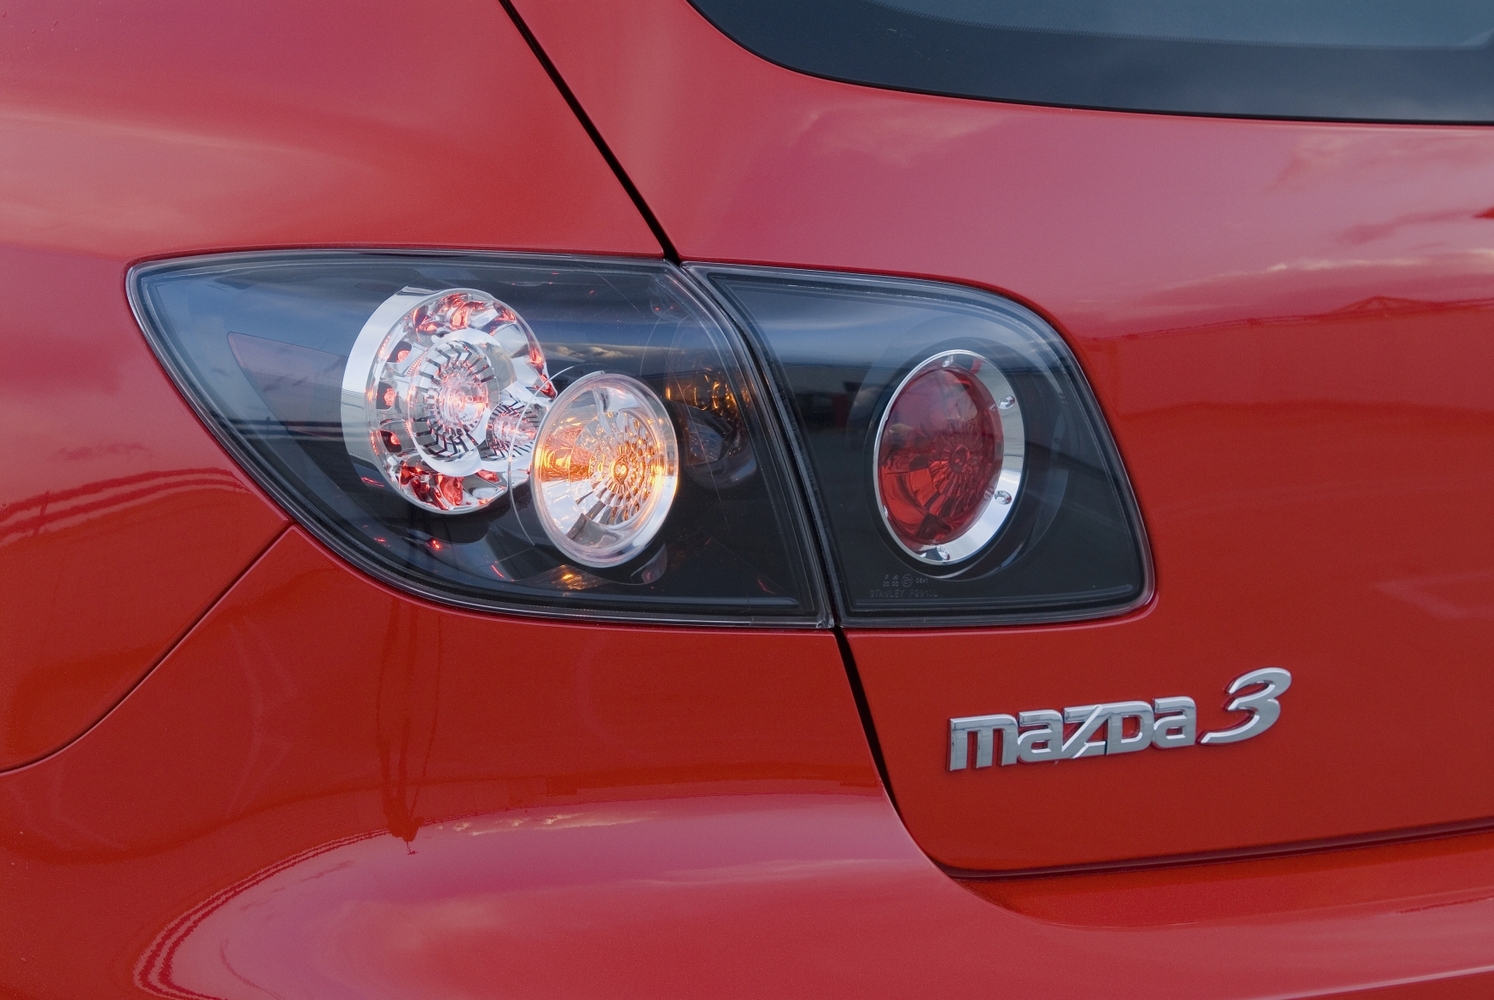 хэтчбек 5 дв. Mazda 3 MPS 2006 - 2008г выпуска модификация MPS 2.3 MT (260 л.с.)